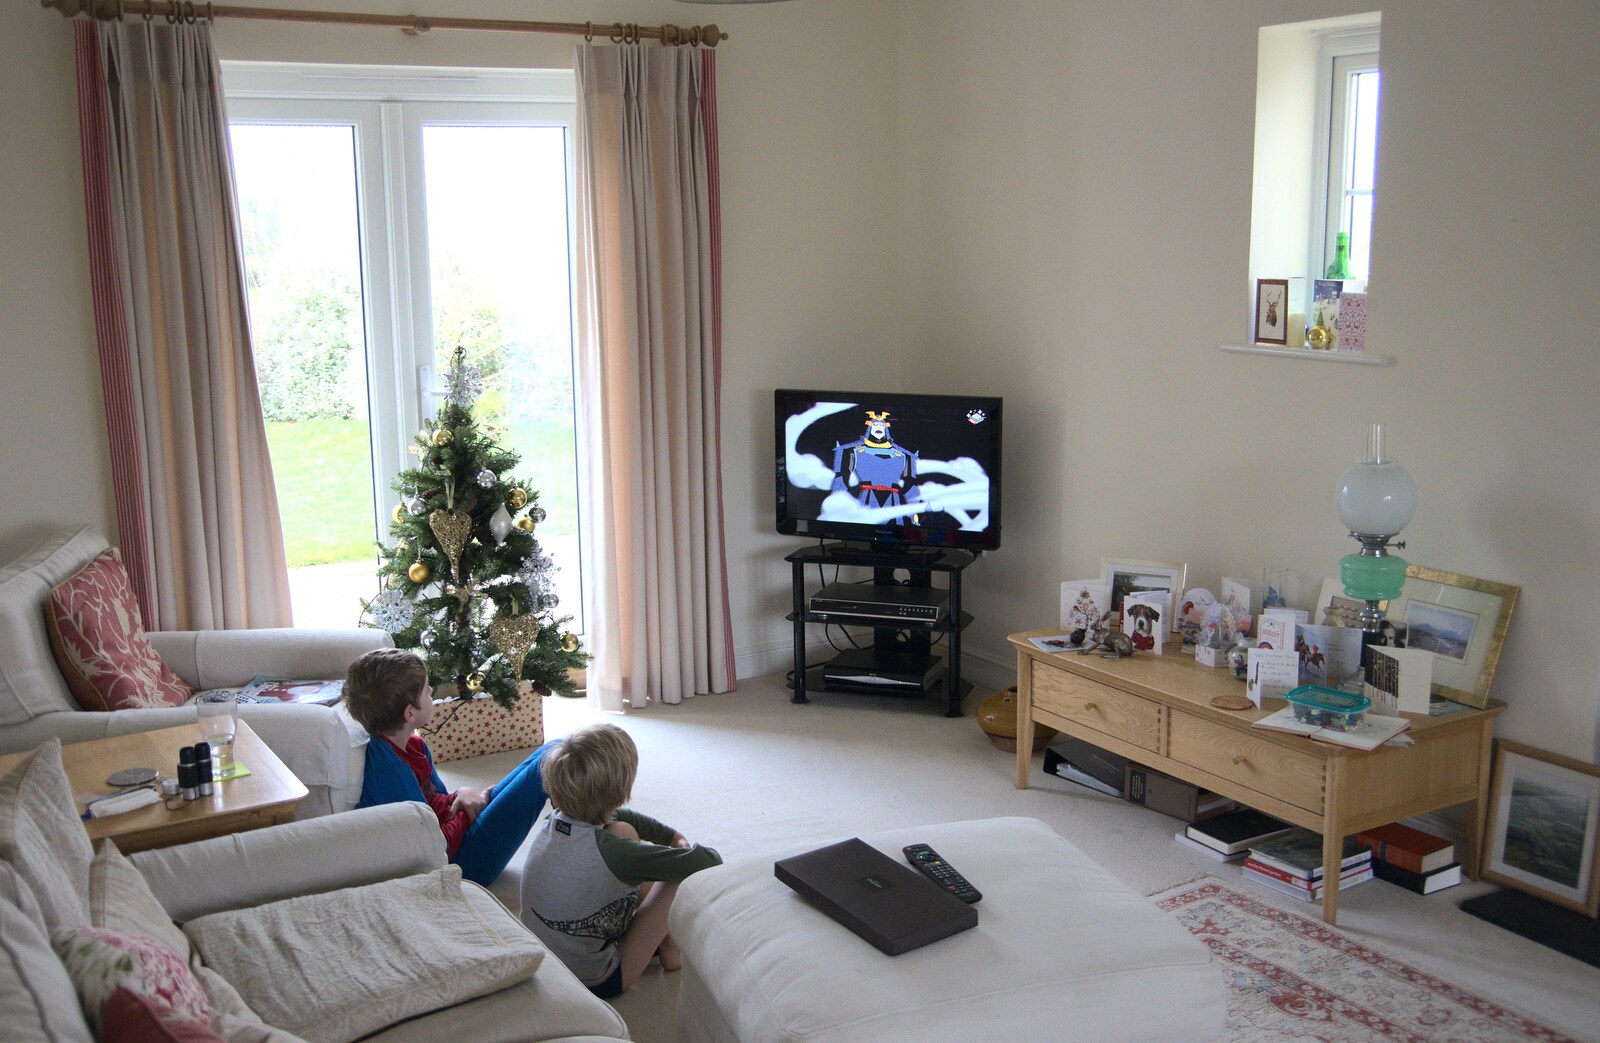 The boys watch some cartoon guff on Gradnma J's telly from An End-of-Year Trip to Spreyton, Devon - 29th December 2017